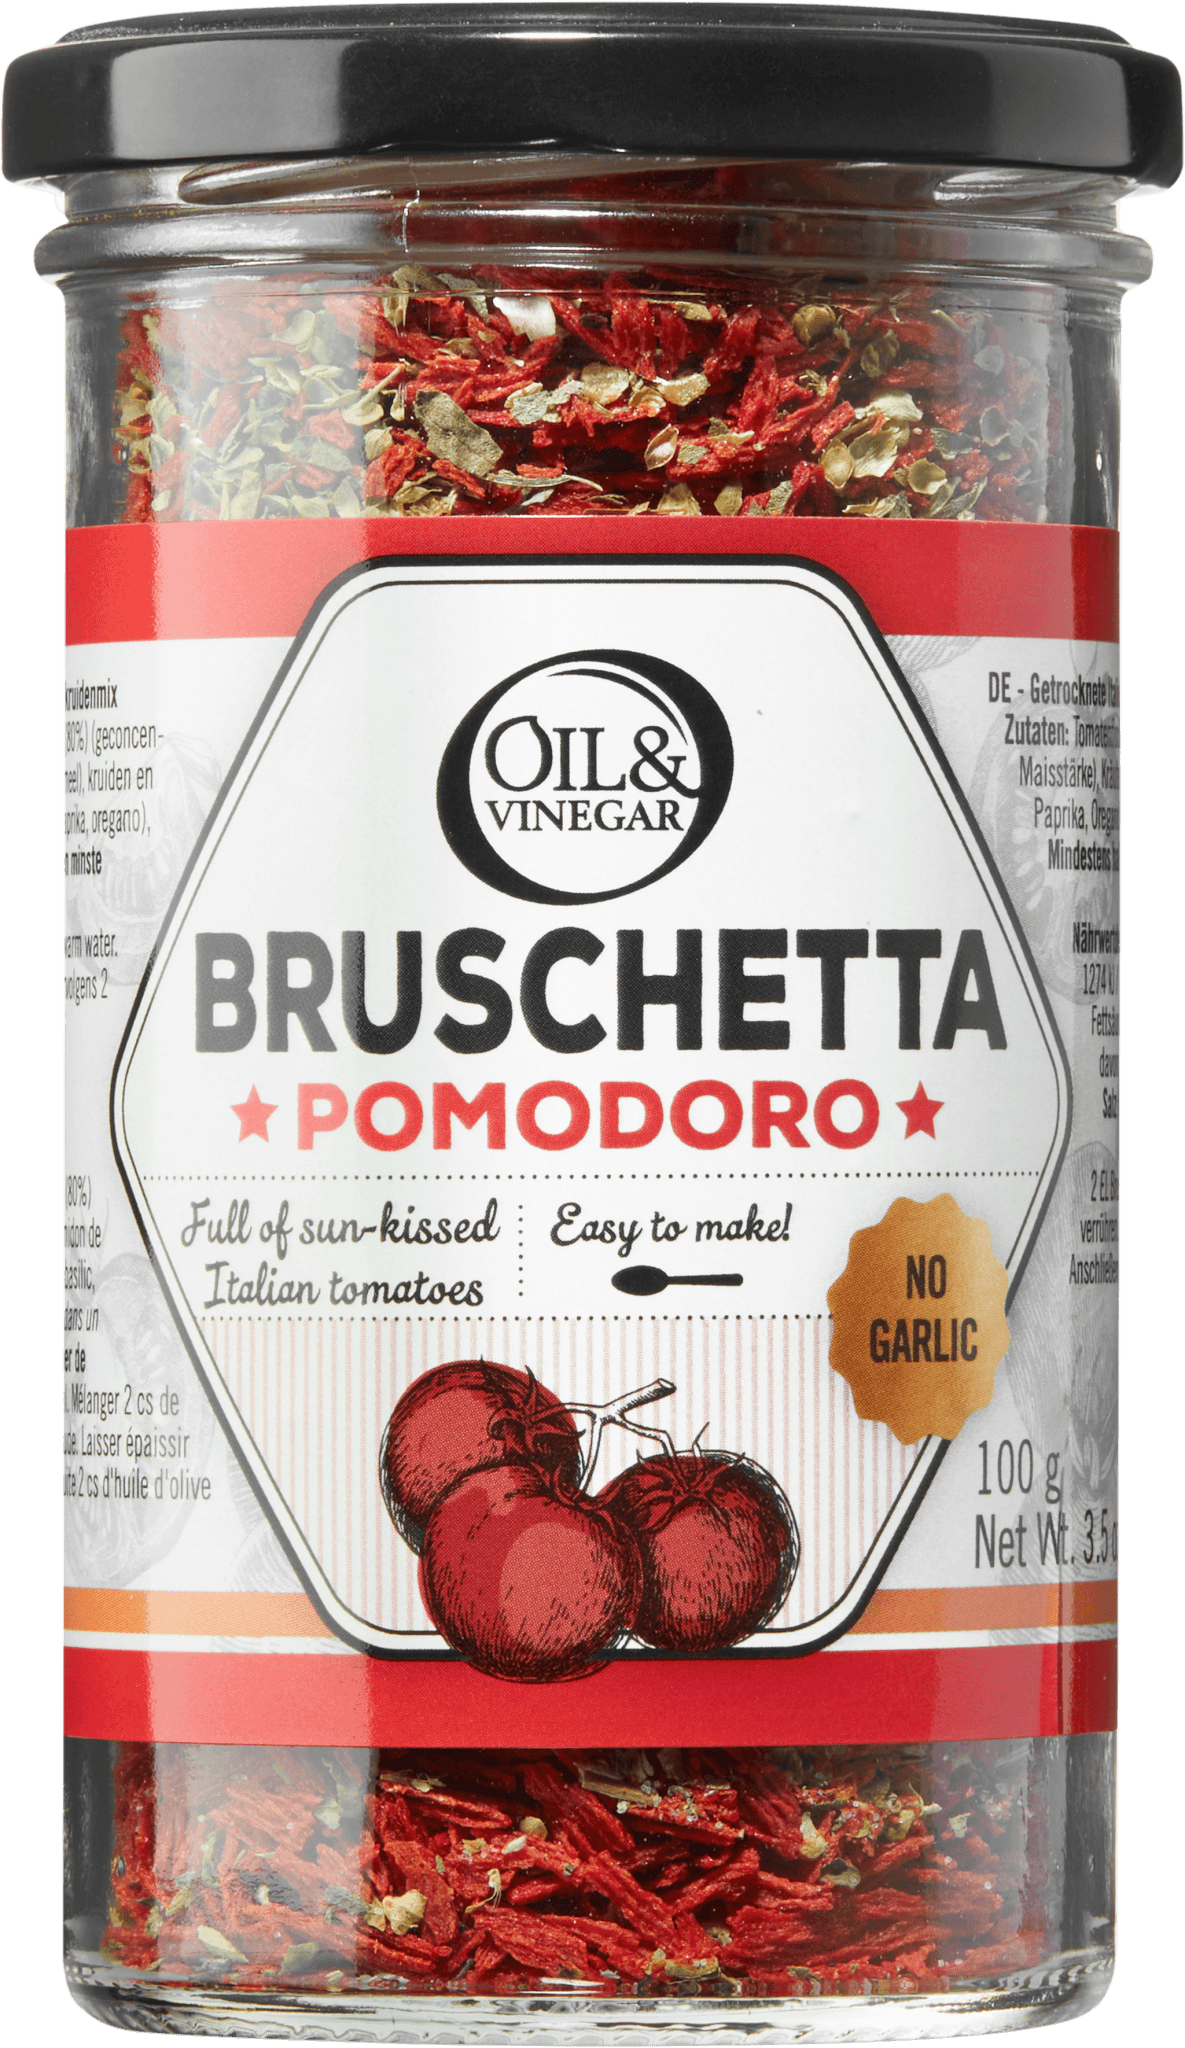 Bruschetta Pomodoro 100g - oilvinegar.ch